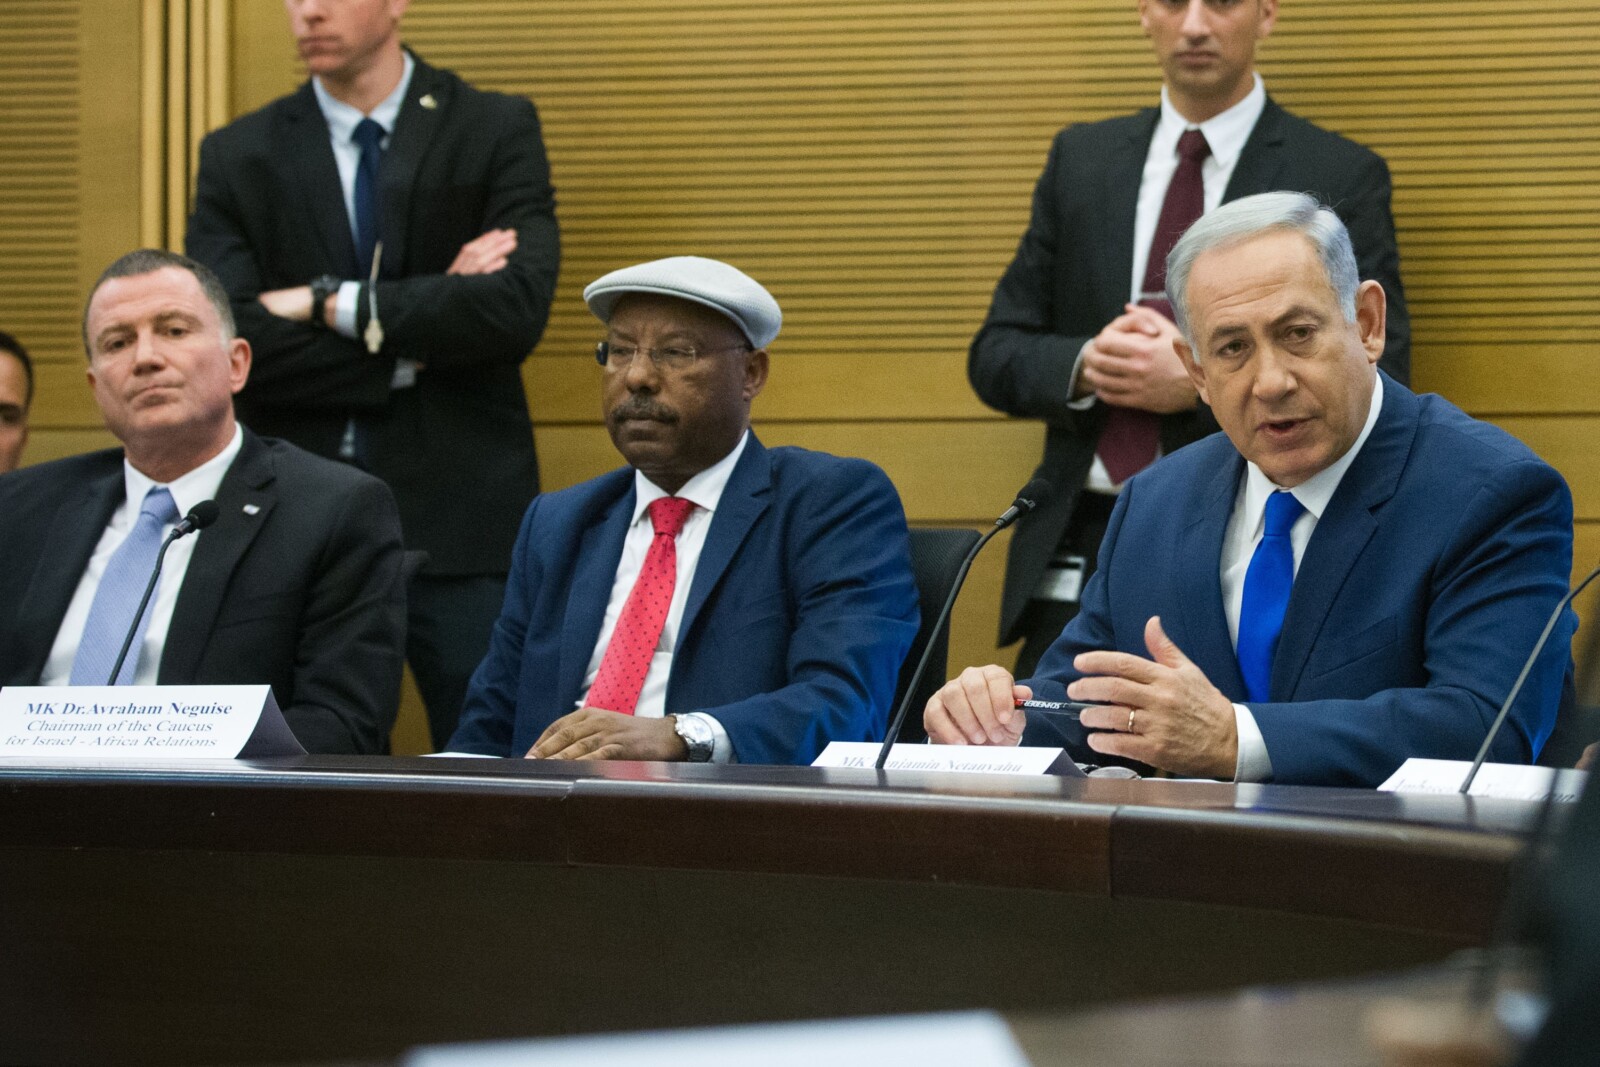 Former member of the Knesset Avraham Negosa (center) in 2016, next to Prime Minister Benjamin Netanyahu (Photo: Miriam Alster/Flash90).